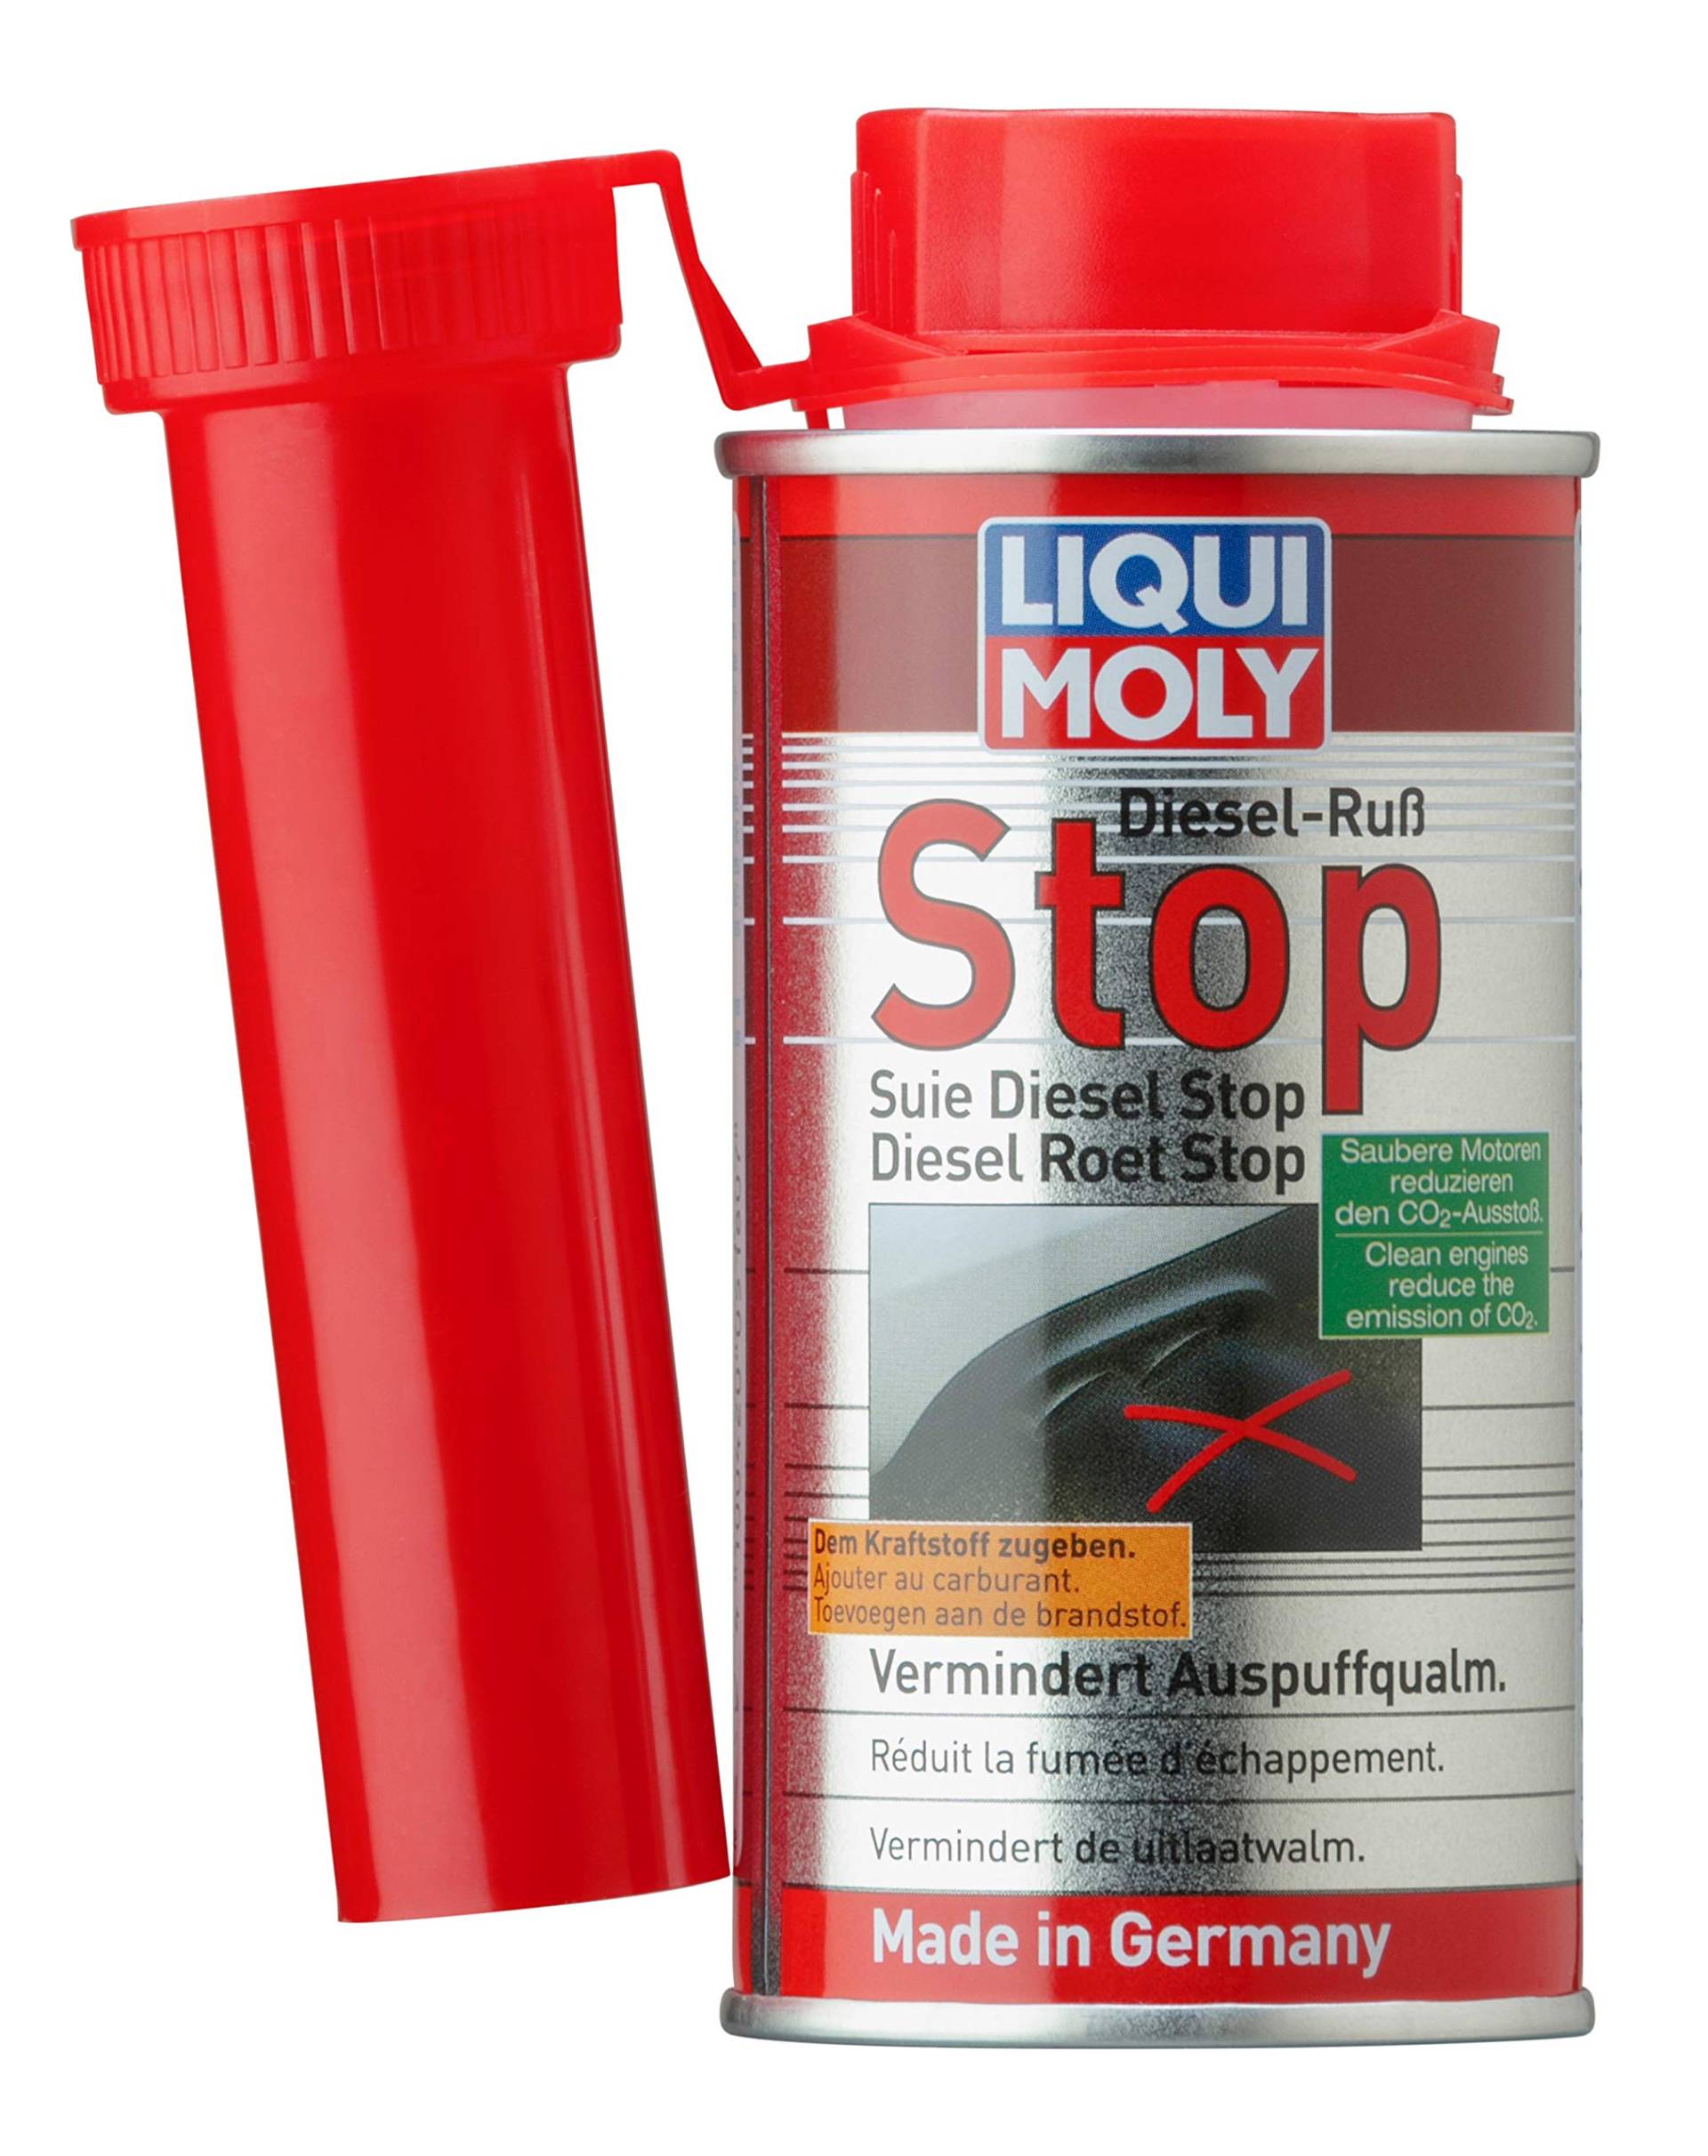 LIQUI MOLY Diesel Ruß-Stop | 150 ml | Dieseladditiv | Art.-Nr.: 5180 von Liqui Moly